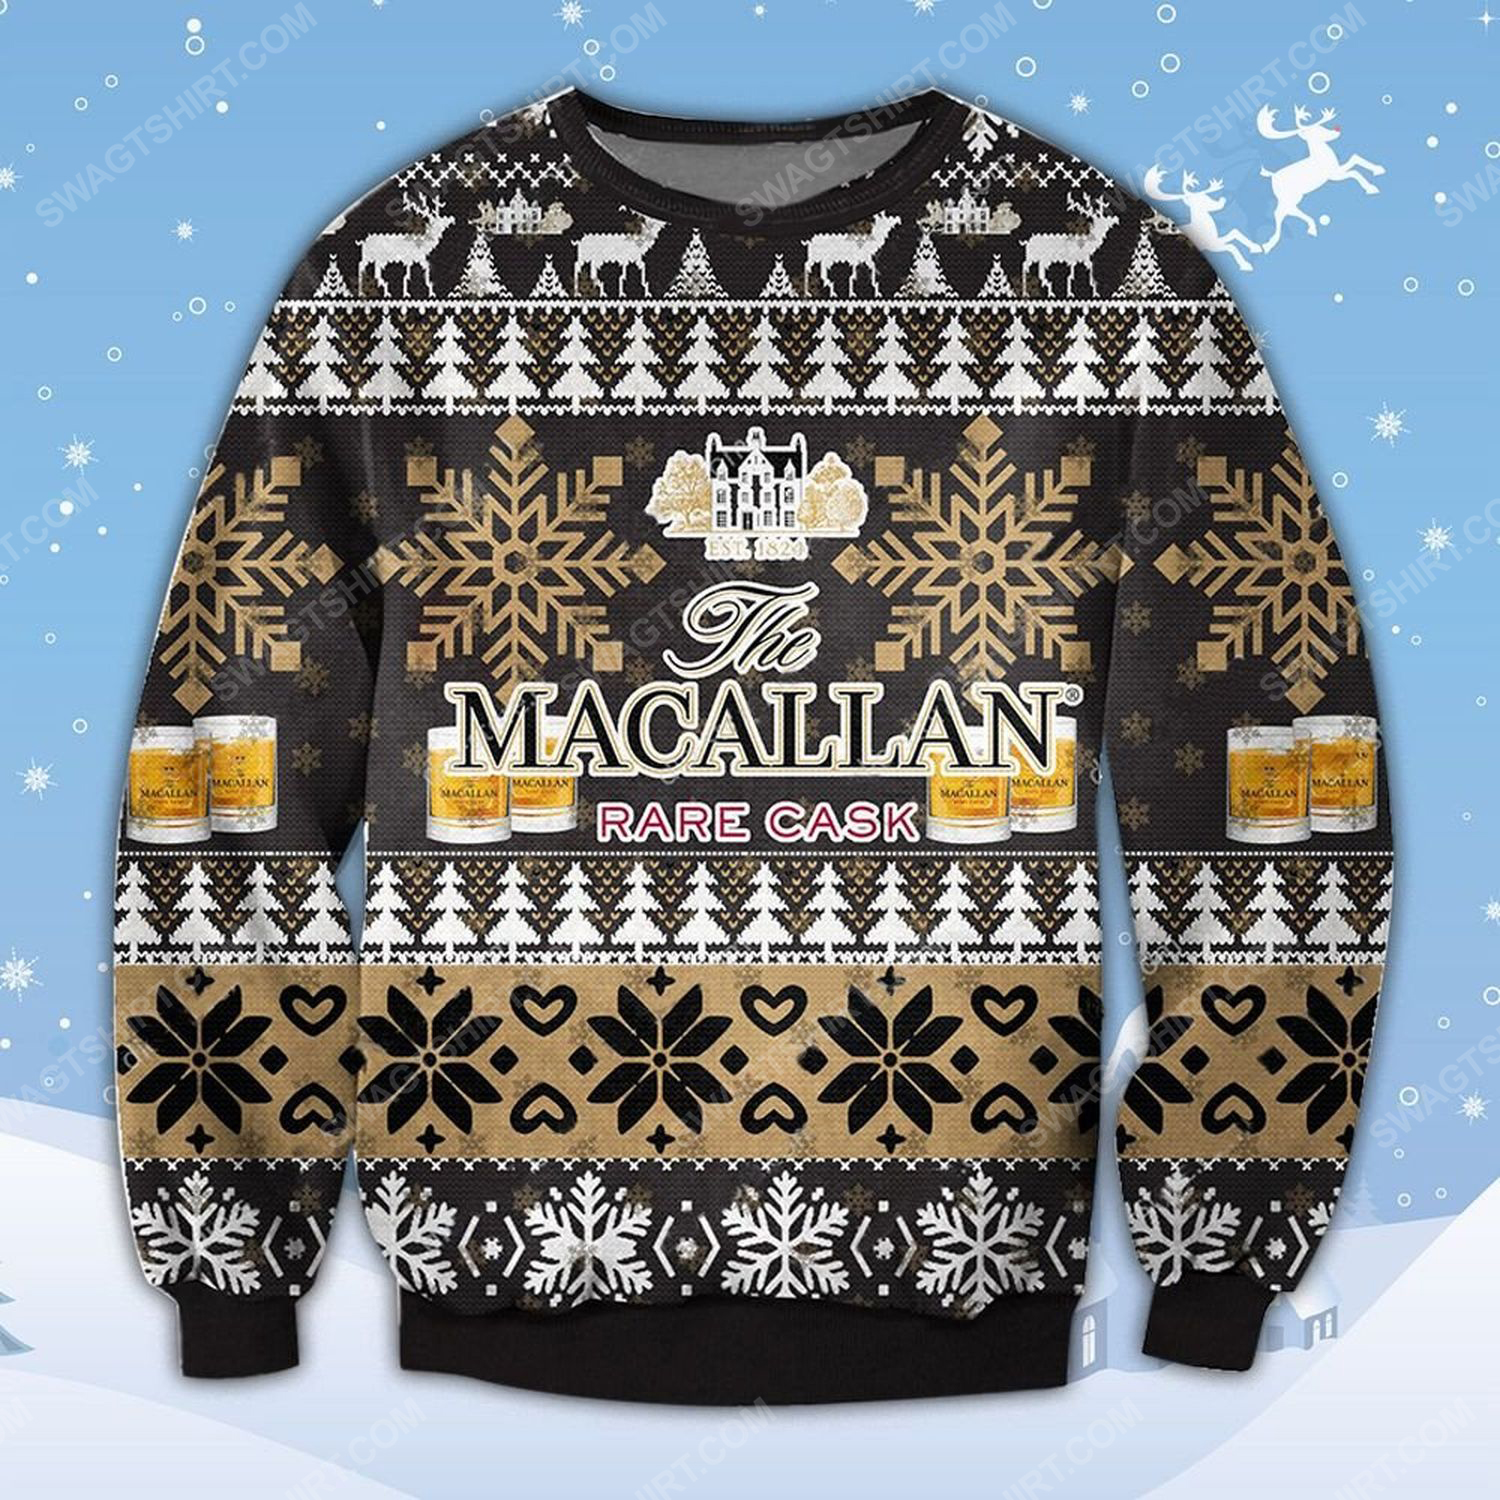 The macallan rare cask ugly christmas sweater